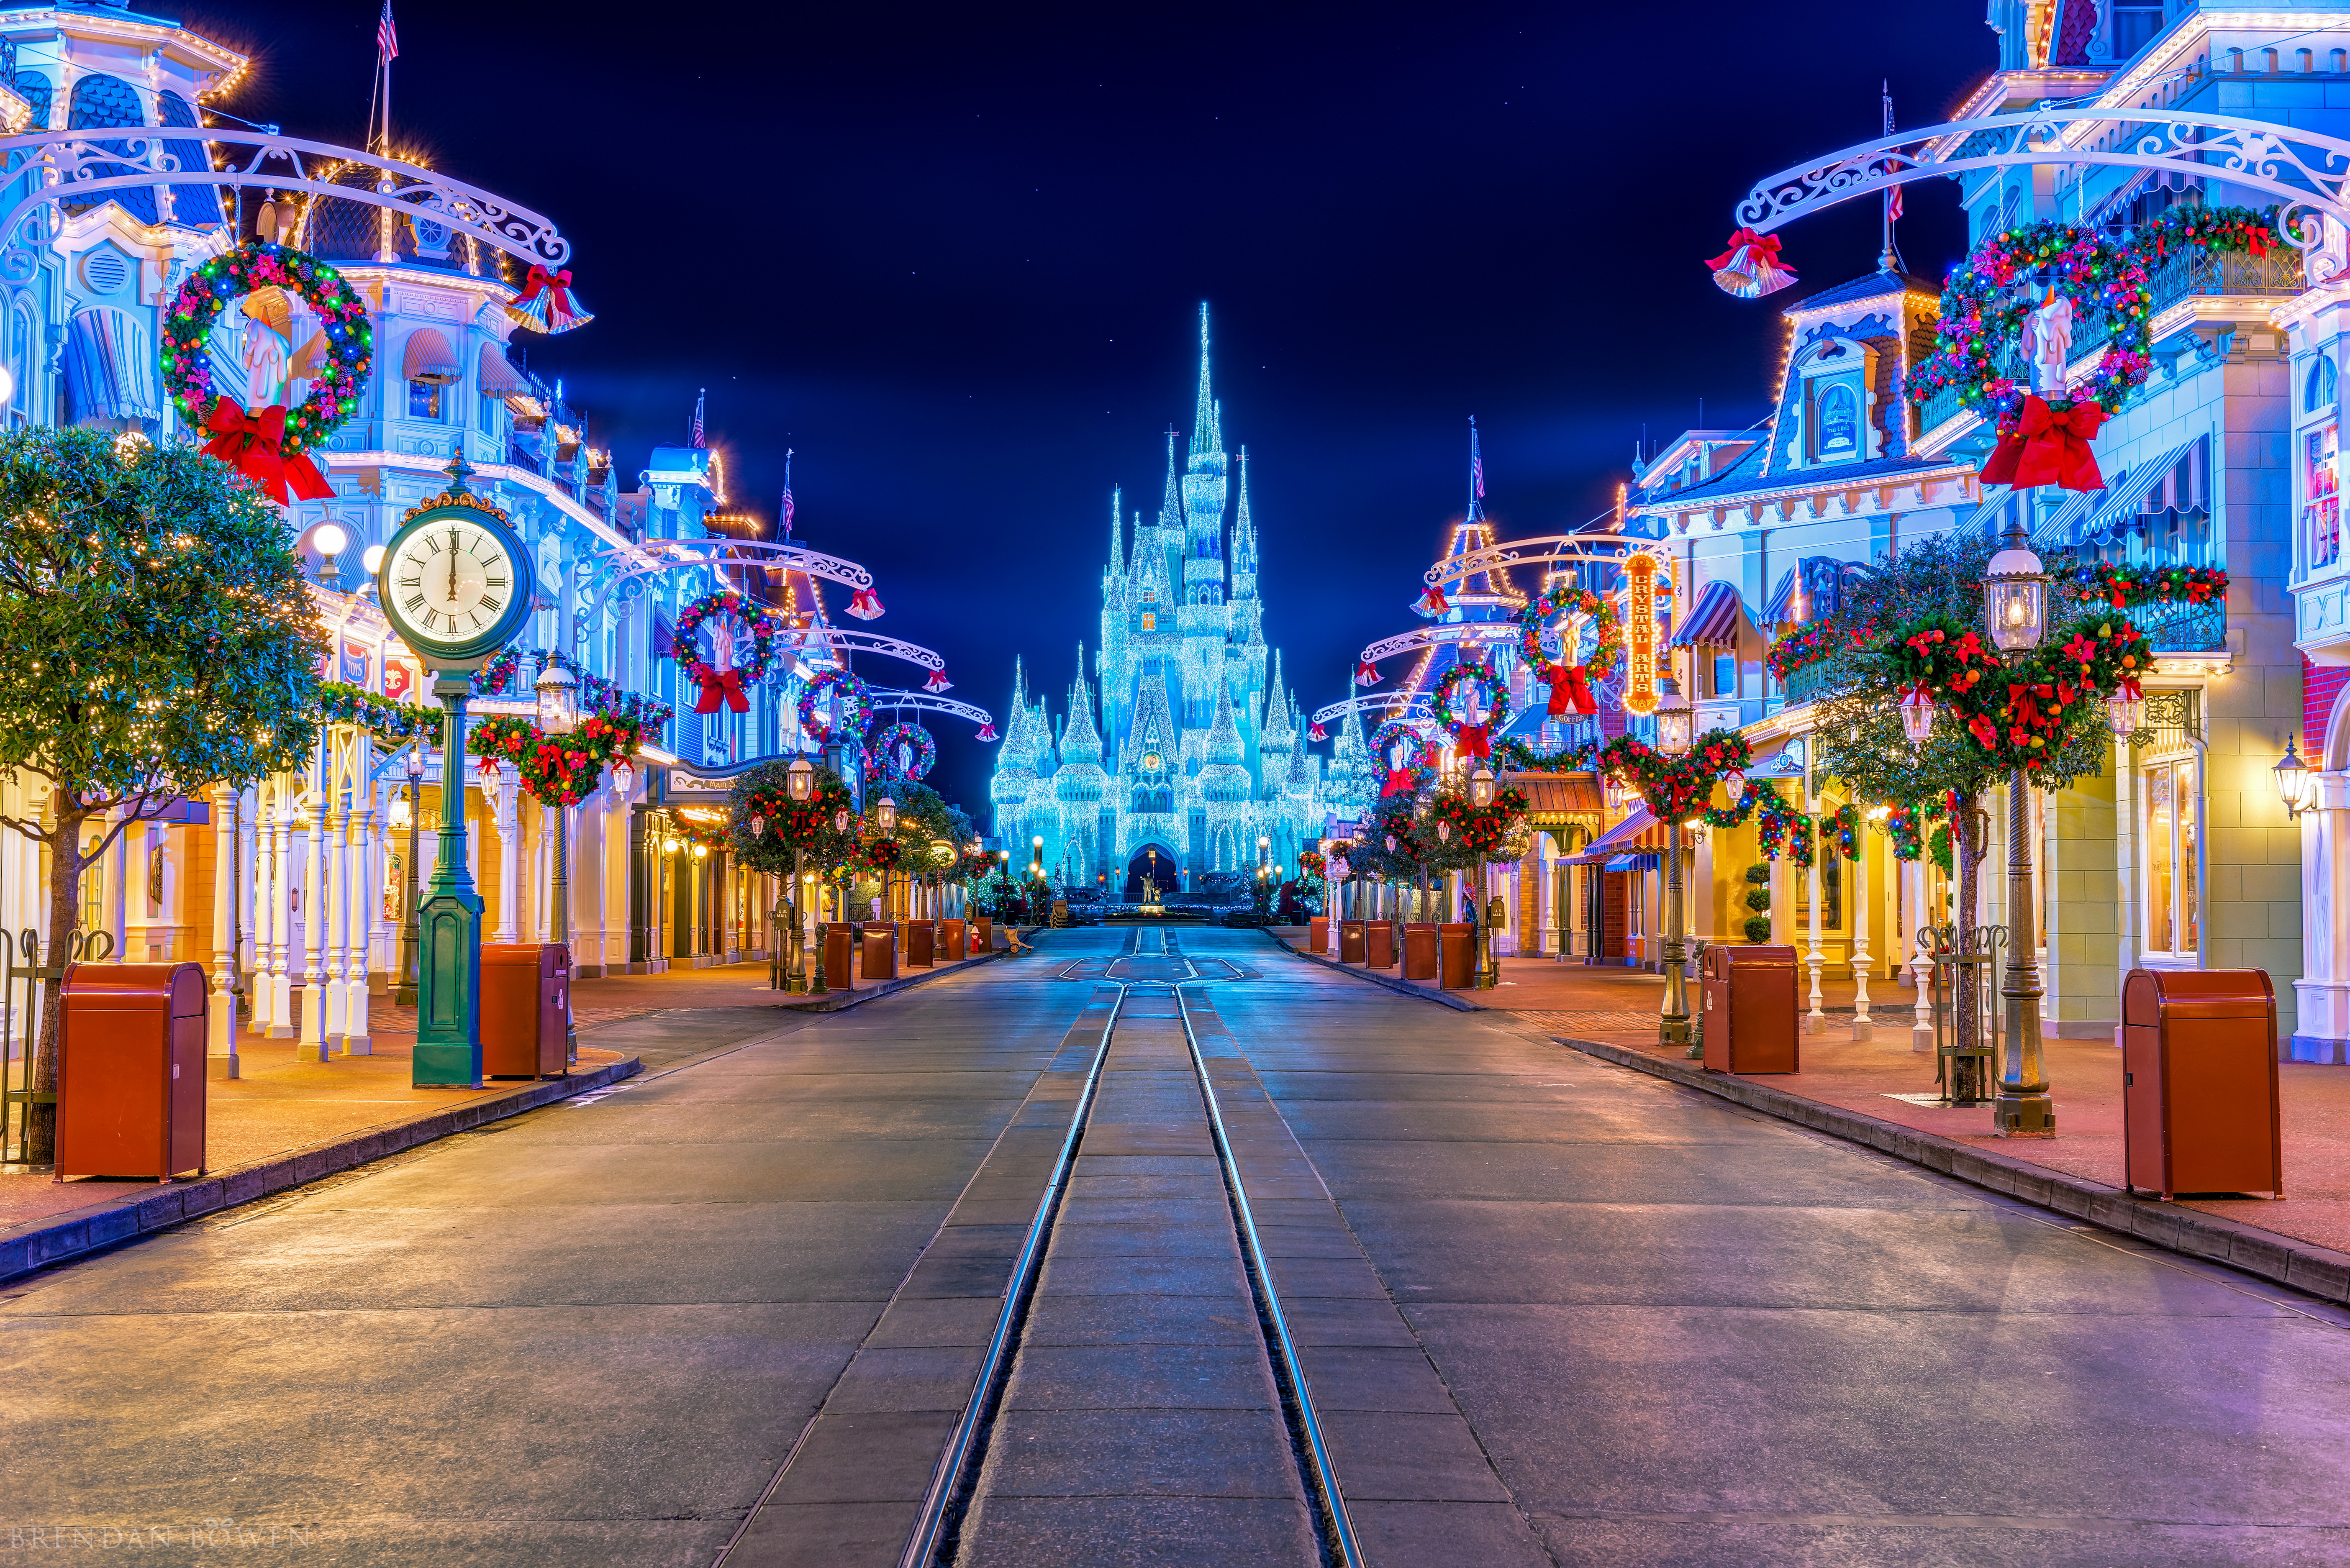 The Dreamy Disneyland – California (USA) | World for Travel